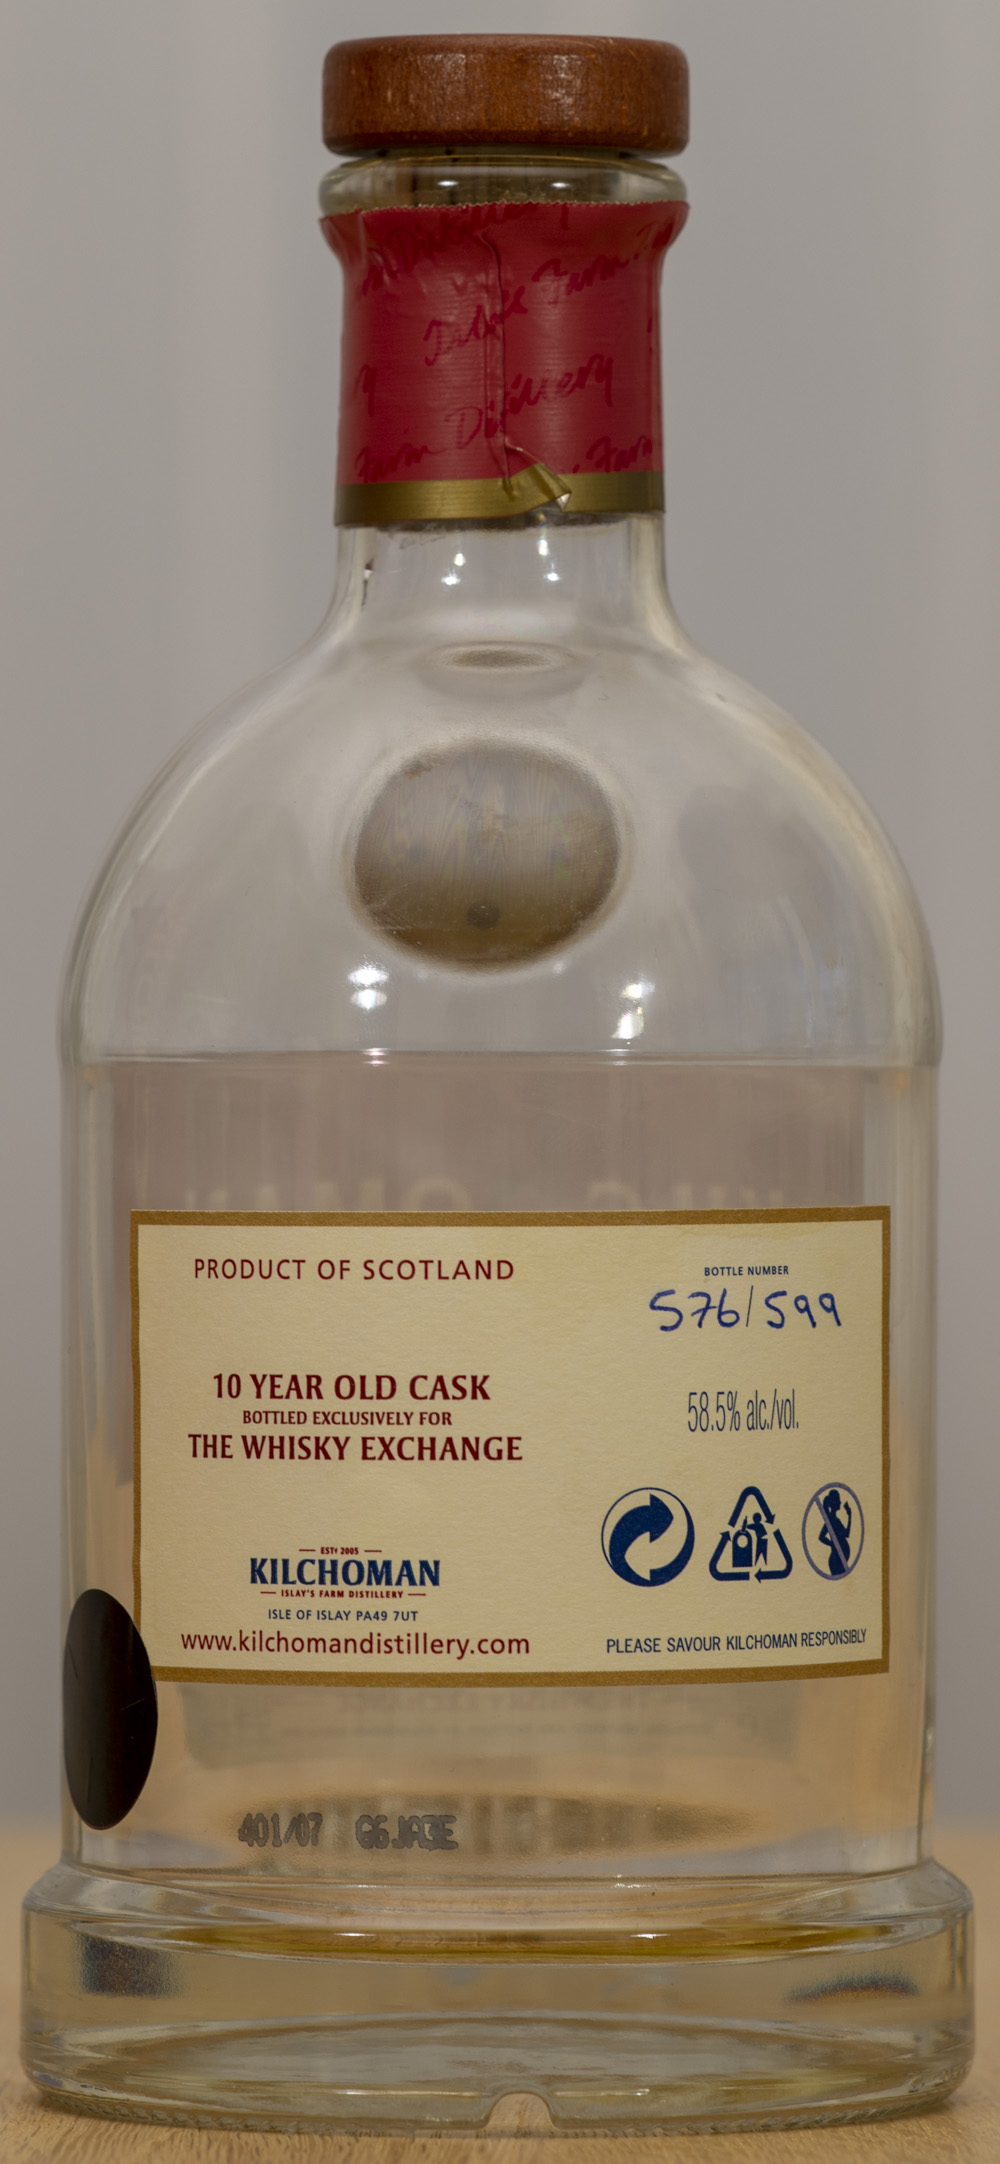 Billede: PHC_1547 Kilchoman 10 year Whisky Exchange - bottle back.jpg